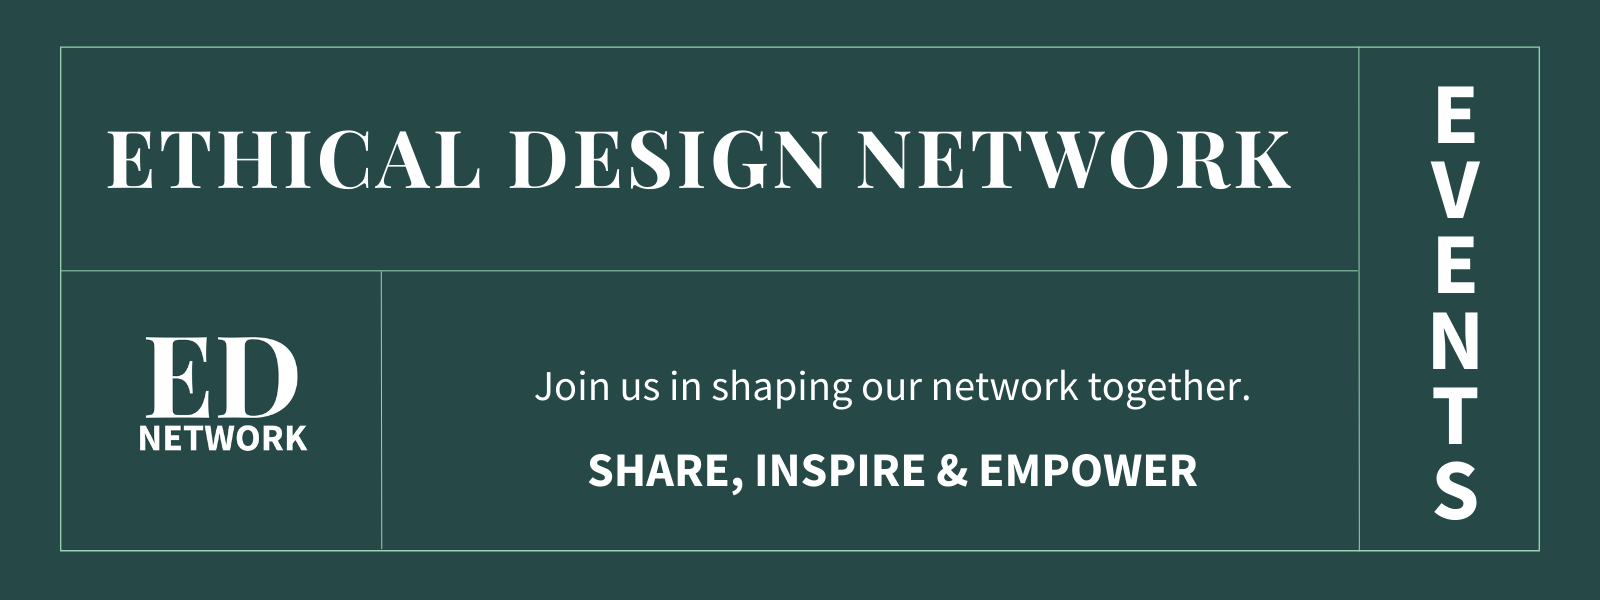 Ethical Design Network Hub banner image